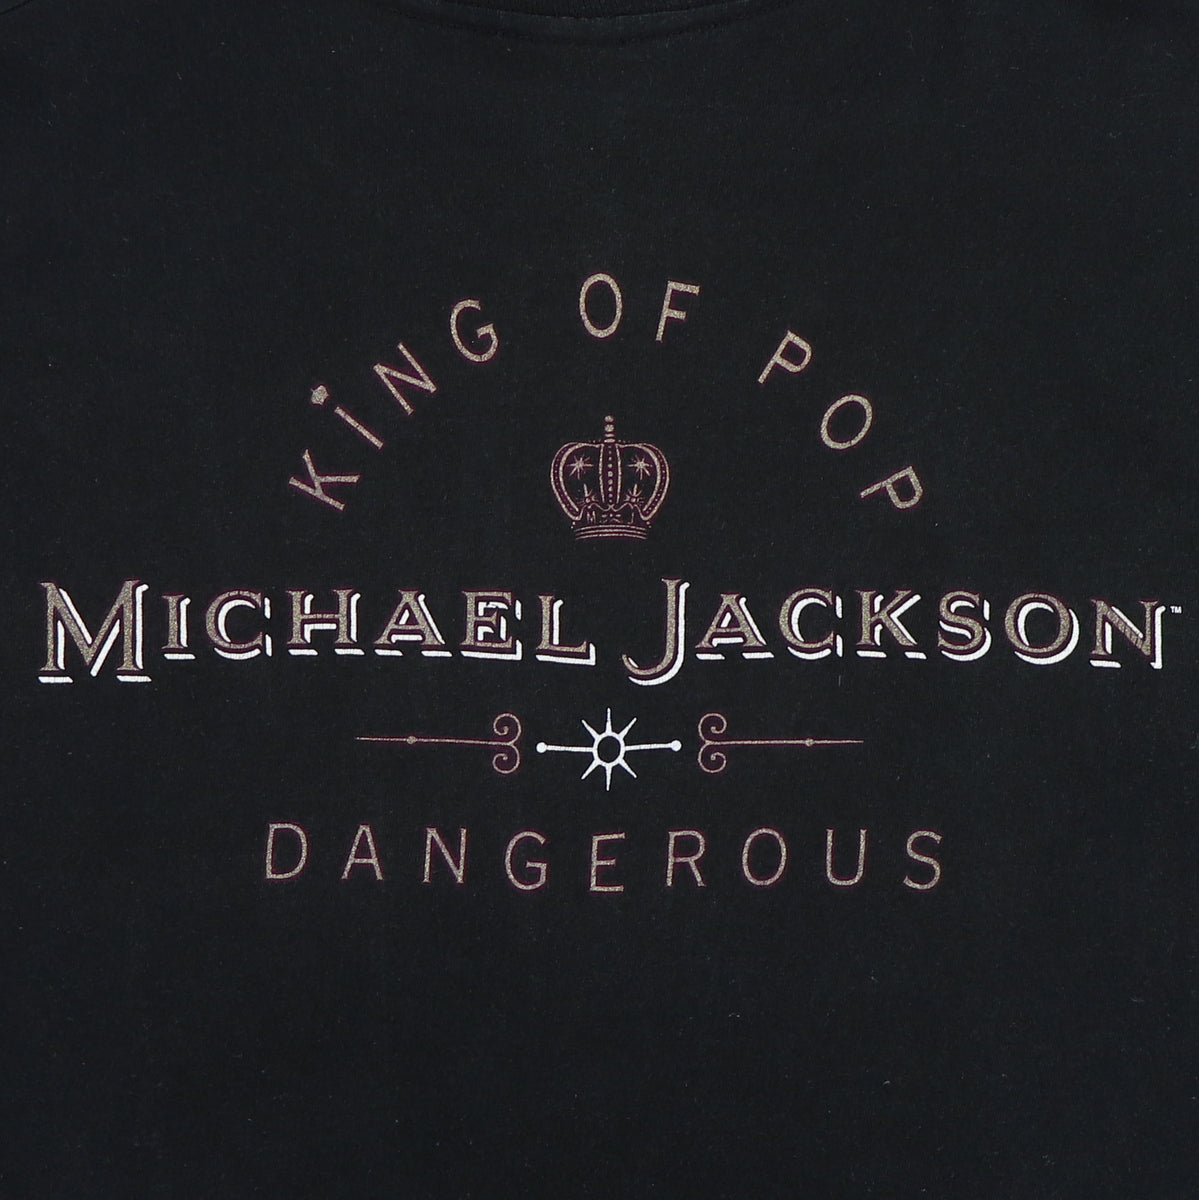 Michael Jackson Dangerous Trending Shirt - NVDTeeshirt